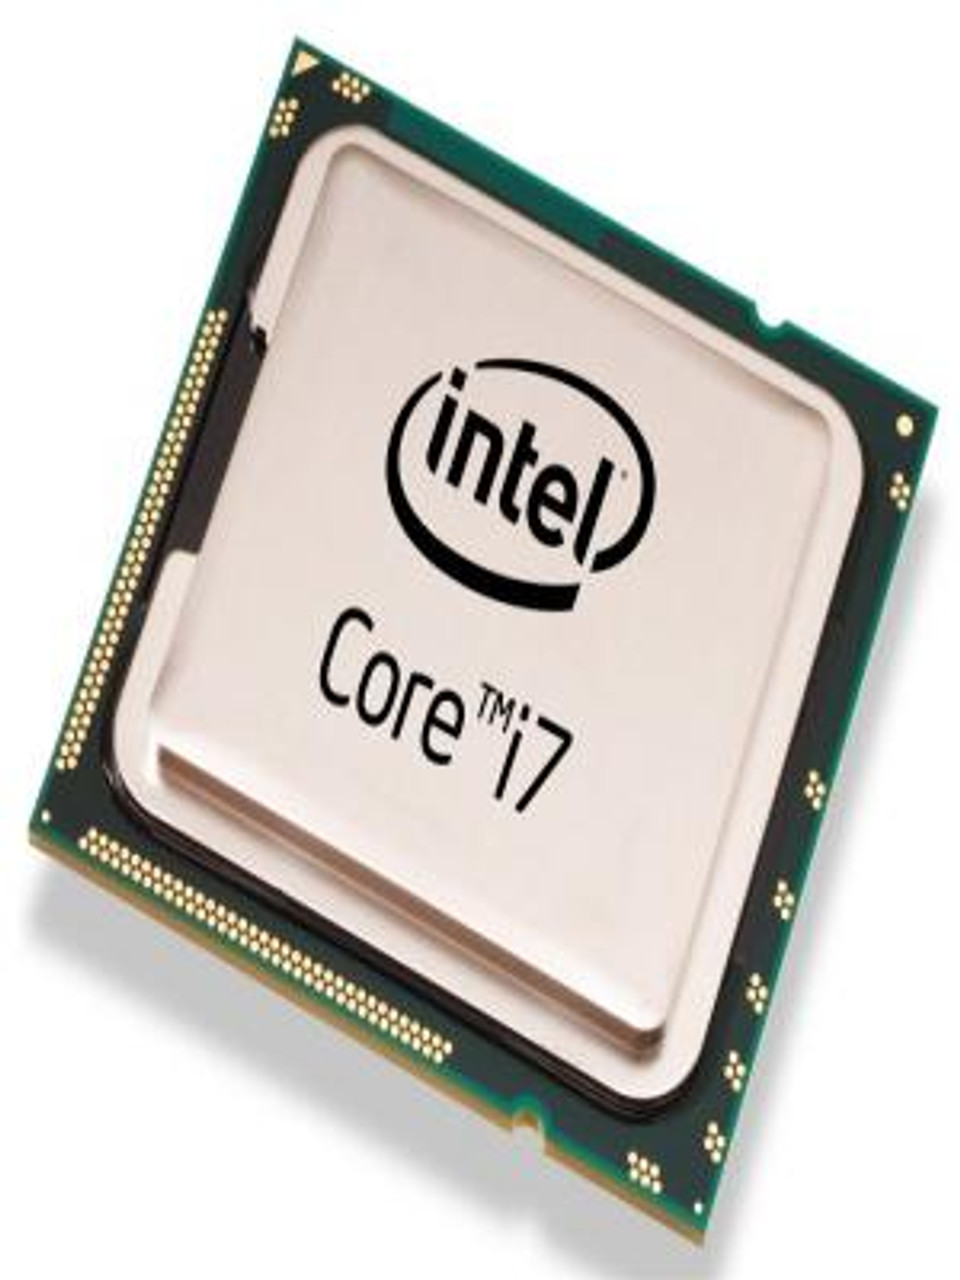 CM8062300833908 Intel Core i7-2600K 3.4GHz Desktop CPU